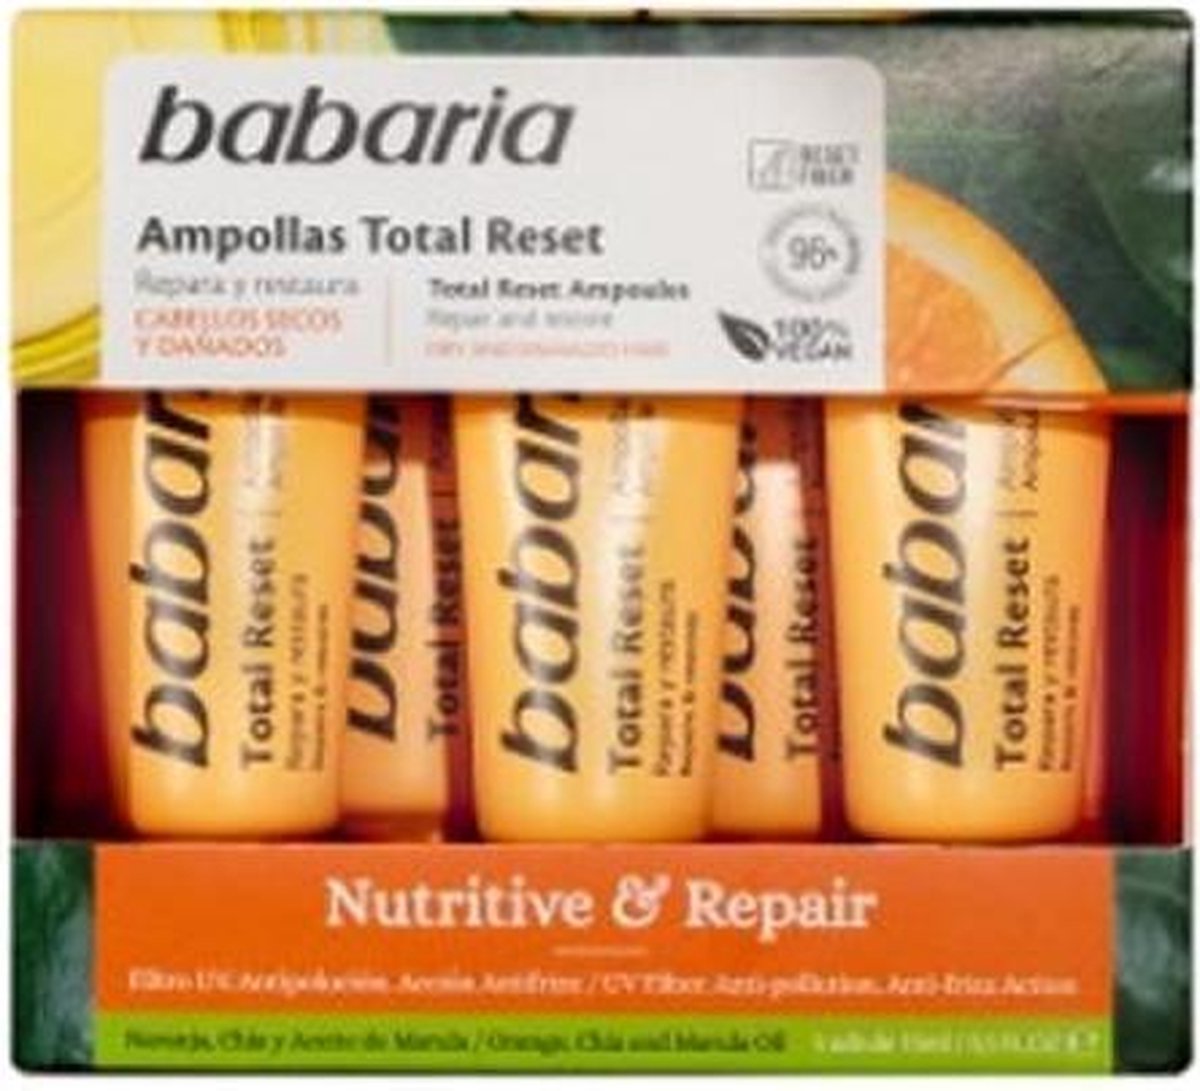 Babaria Nutritive & Repair Total Reset Ampoules 5x15ml